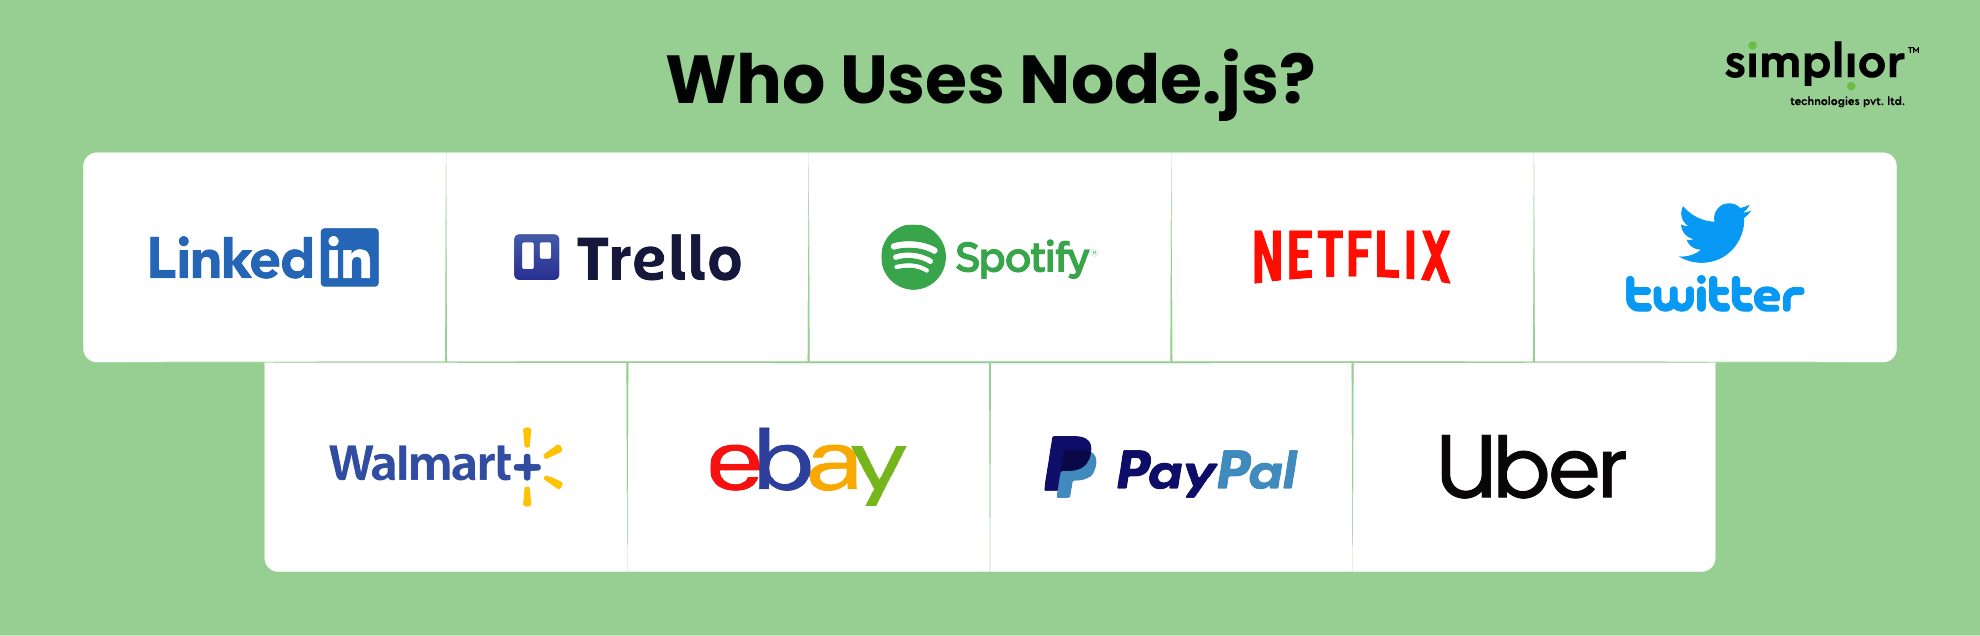 Who Uses Node.js - Simplior